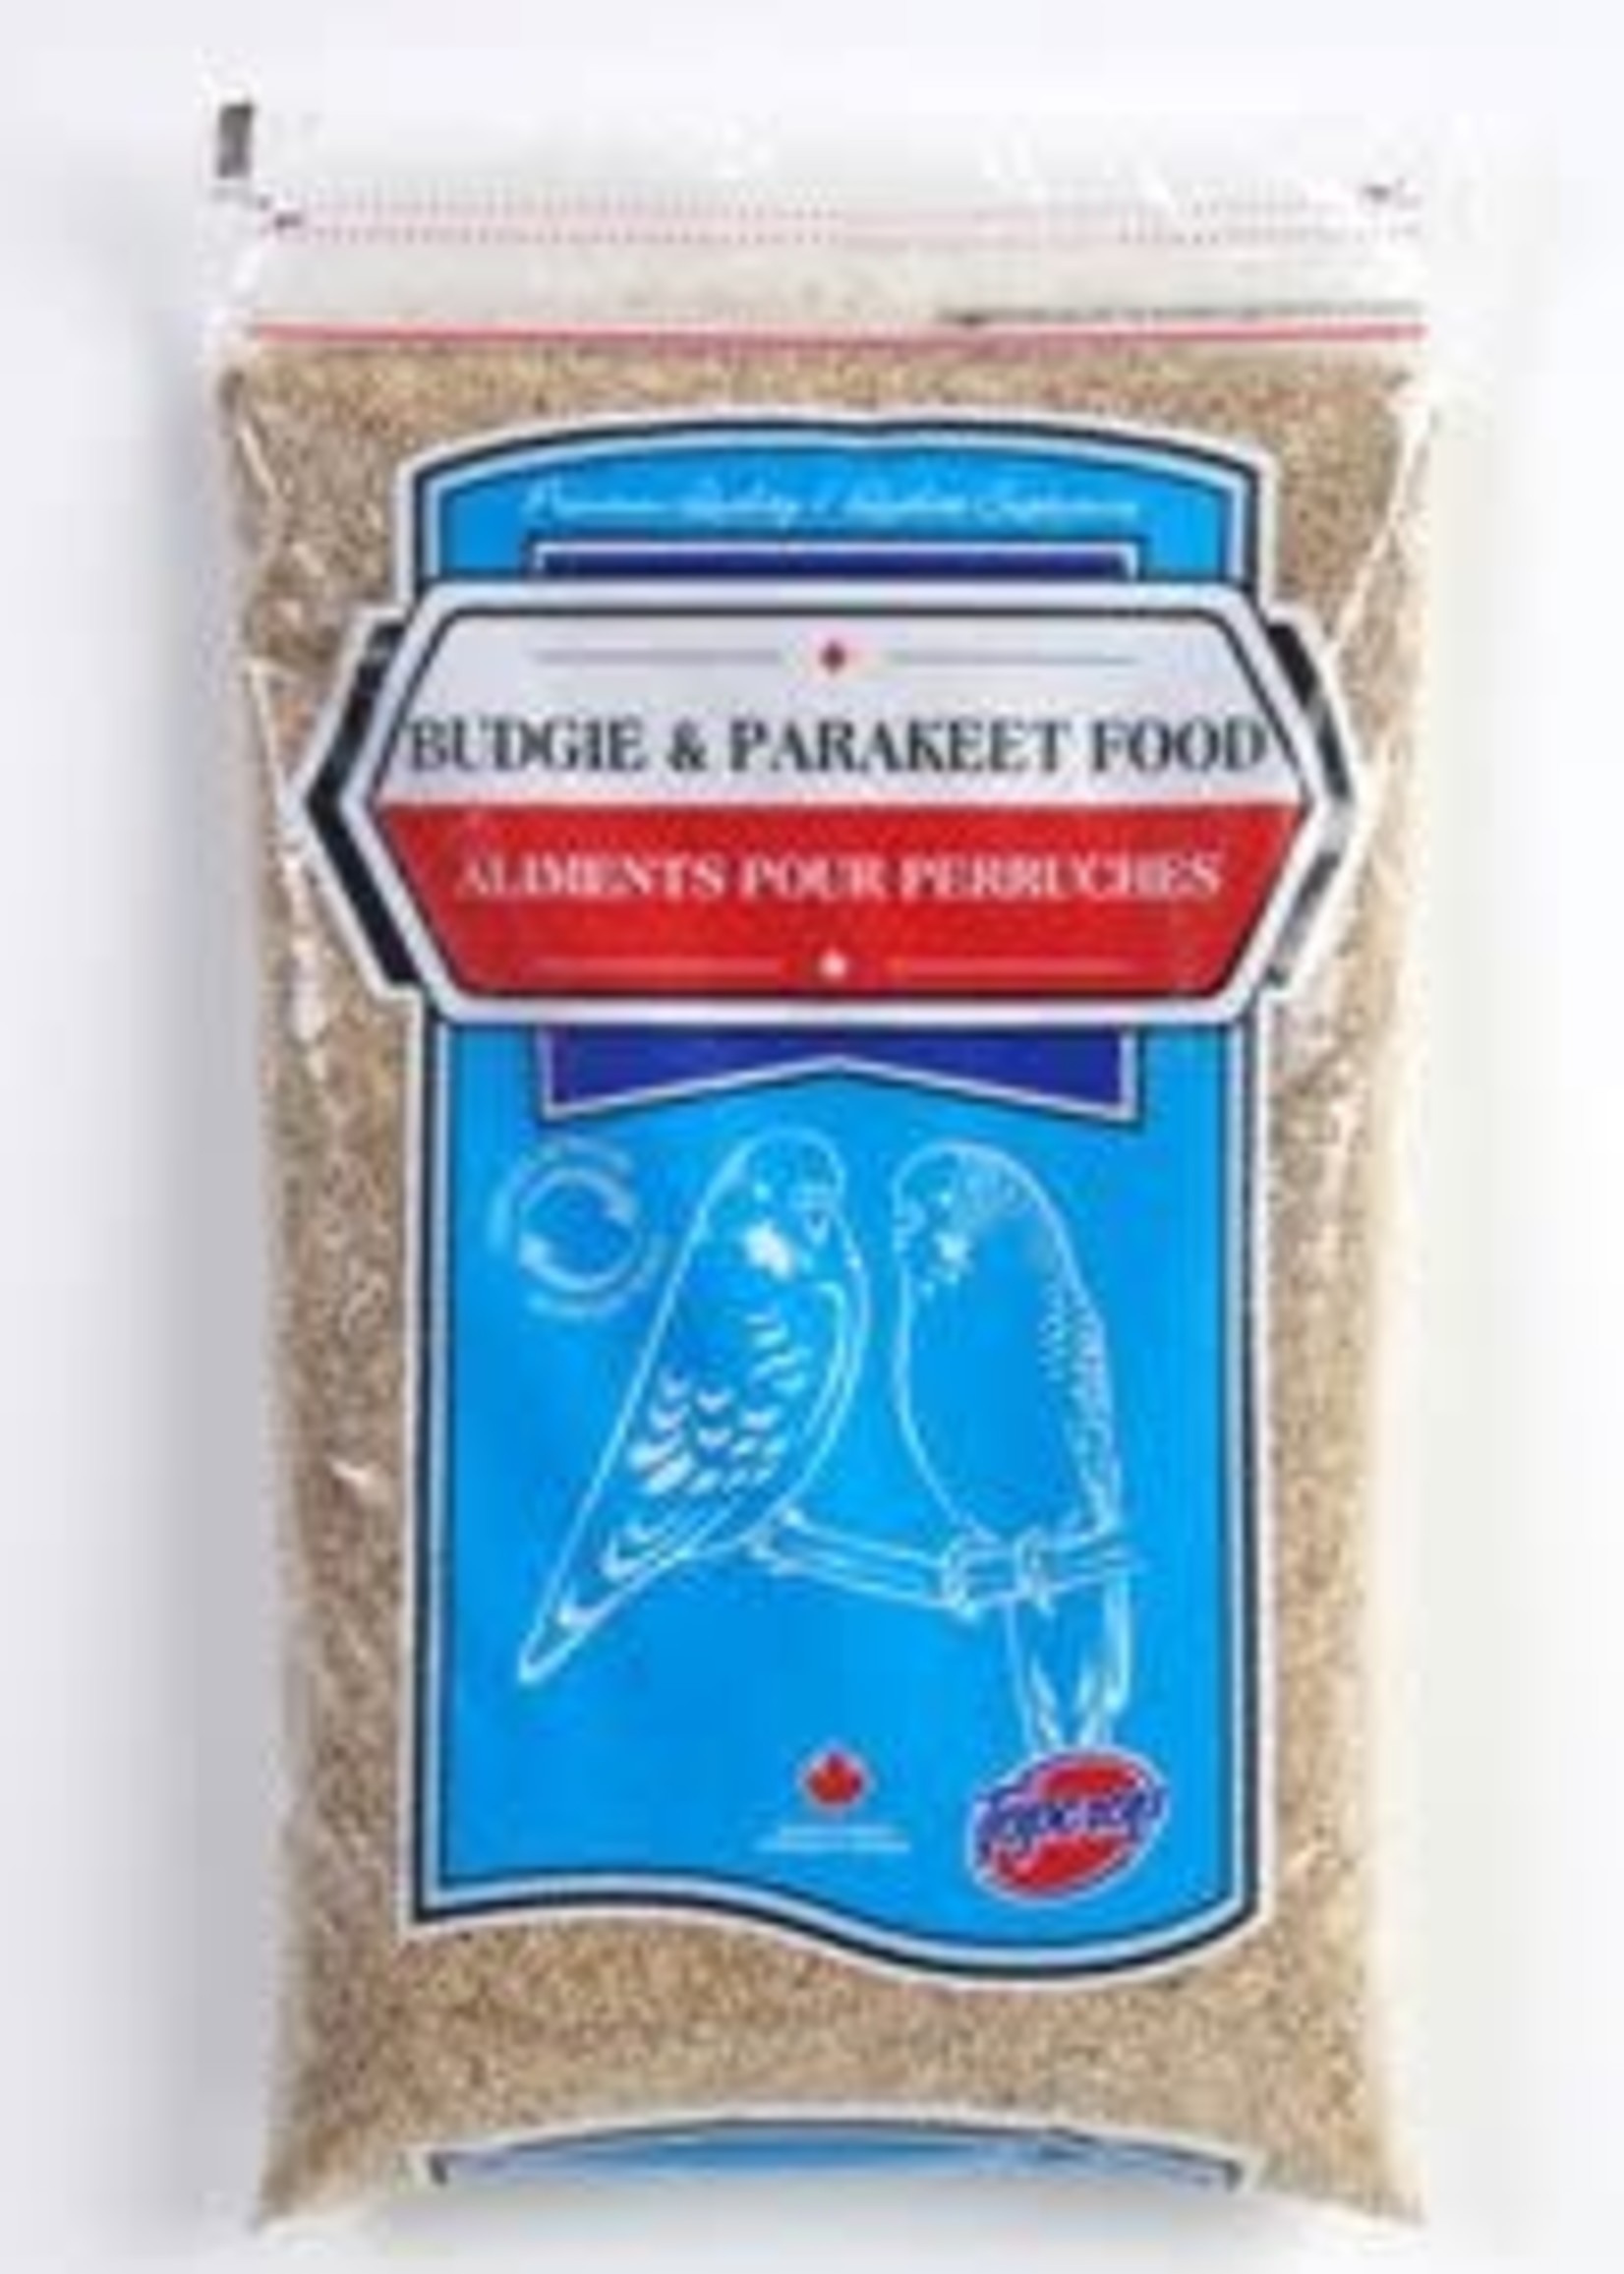 Topcrop® Topcrop Budgie & Parakeet Food 4.5lbs